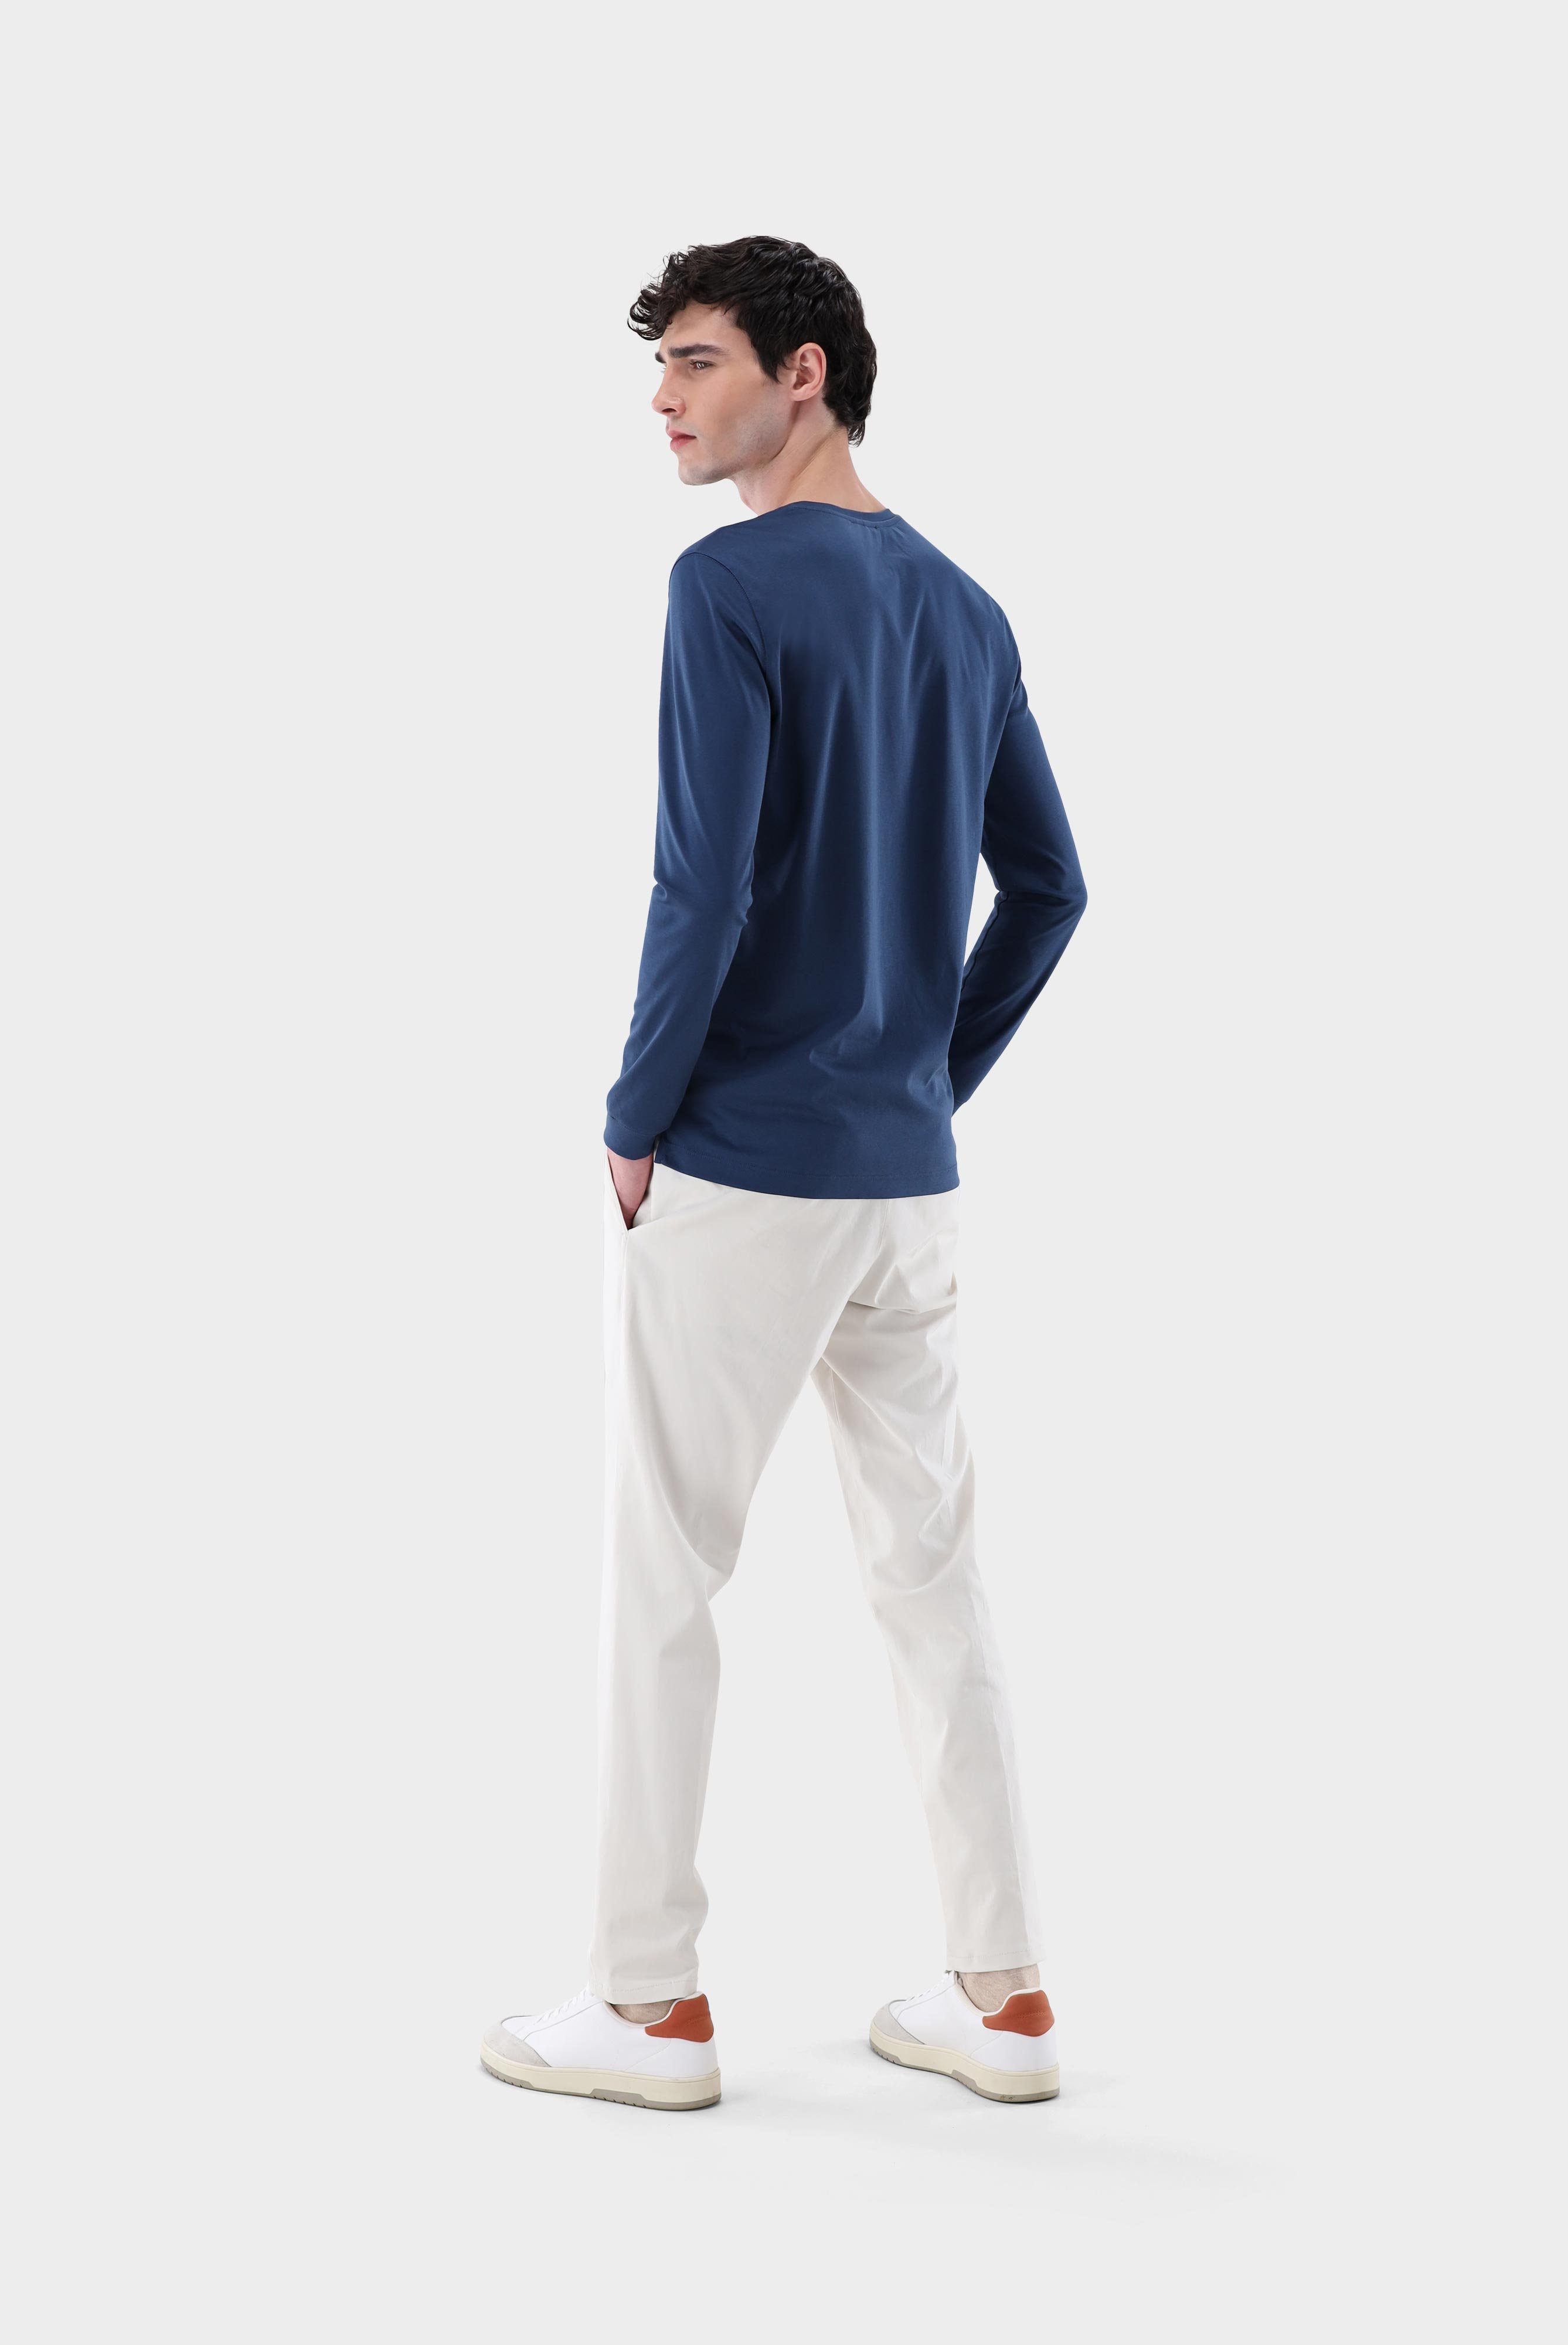 T-Shirts+Long Sleeve T-shirt Swiss Cotton+20.1718.UX.180031.780.M